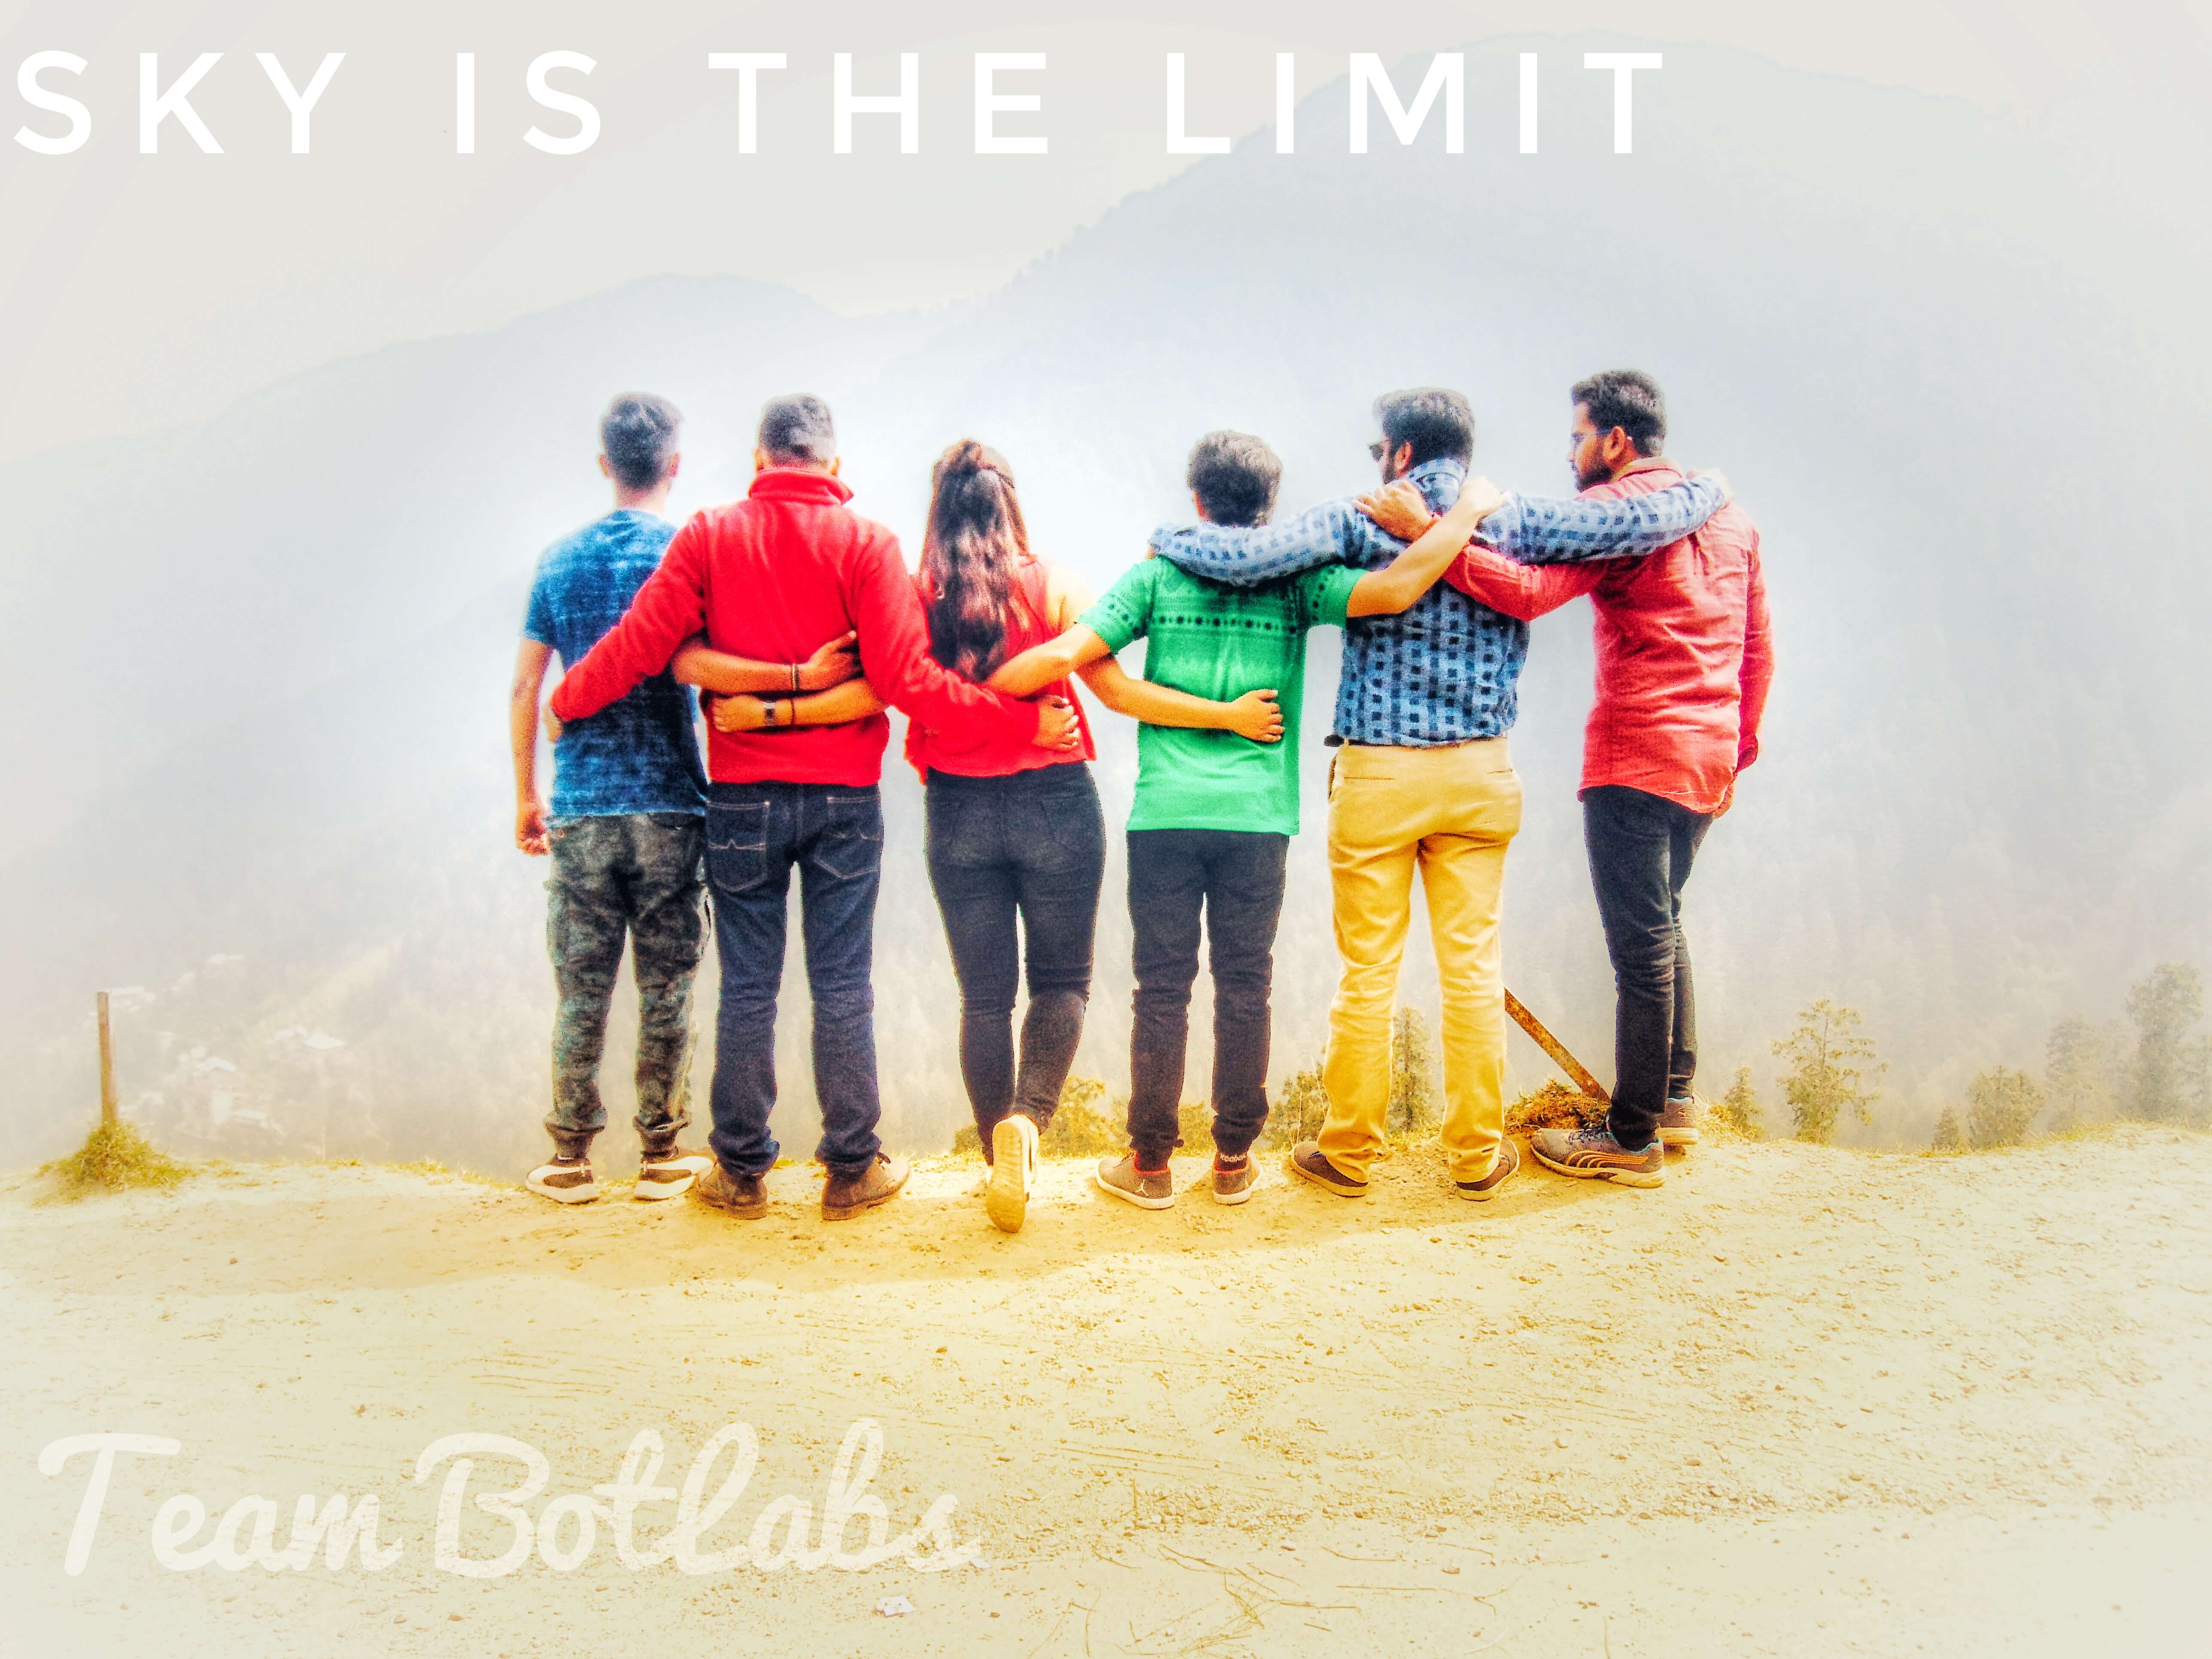 Team Botlabs at Himachal